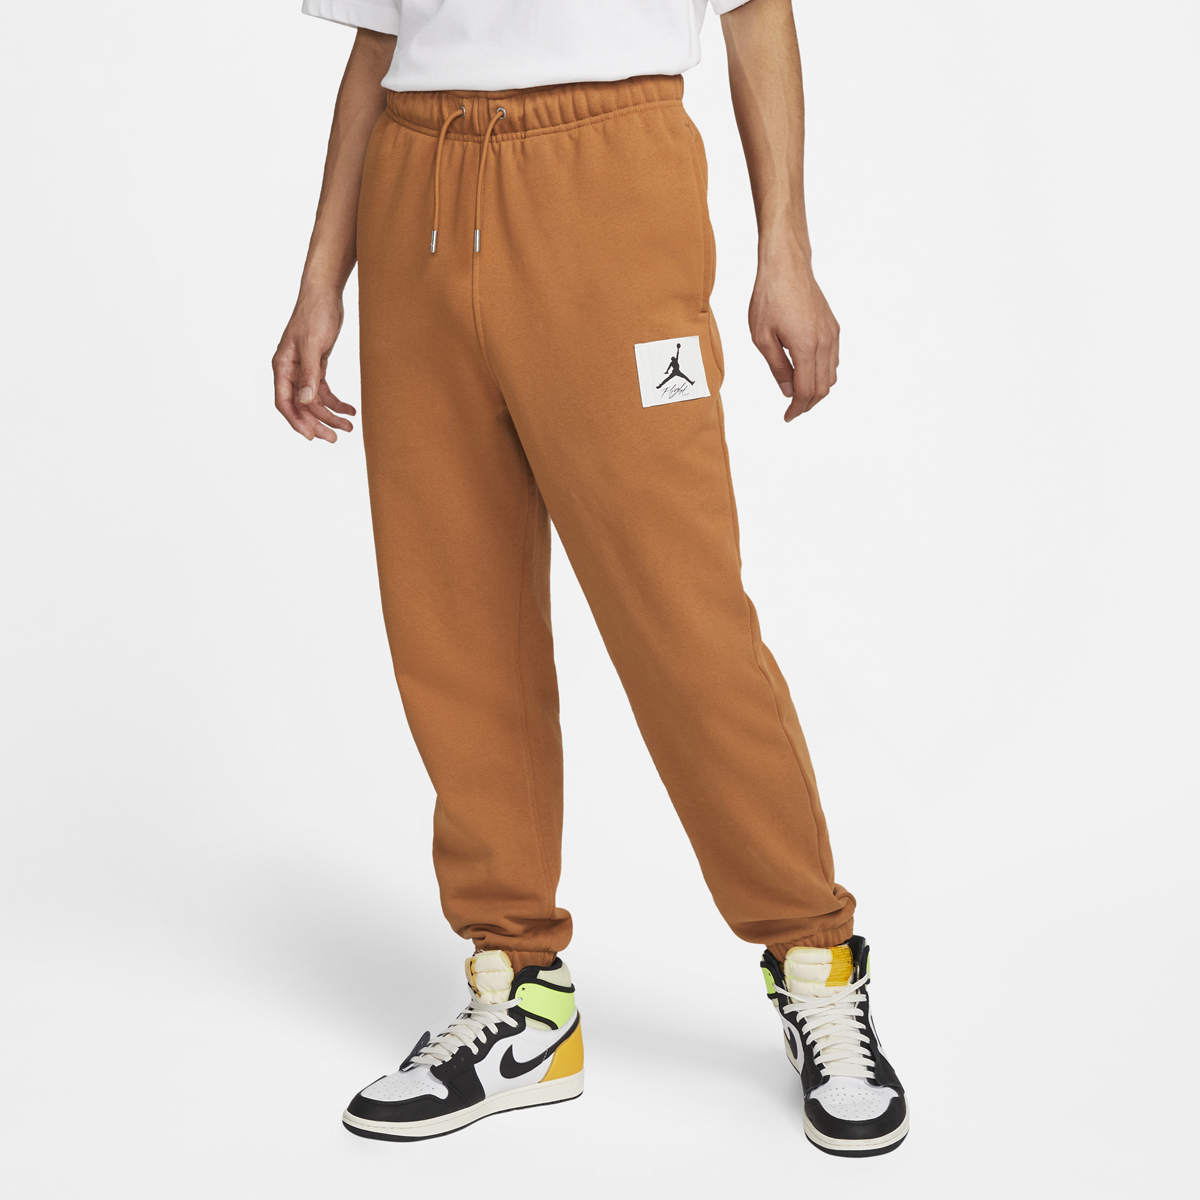 Jordan-Essentials-Pants-Brown-1